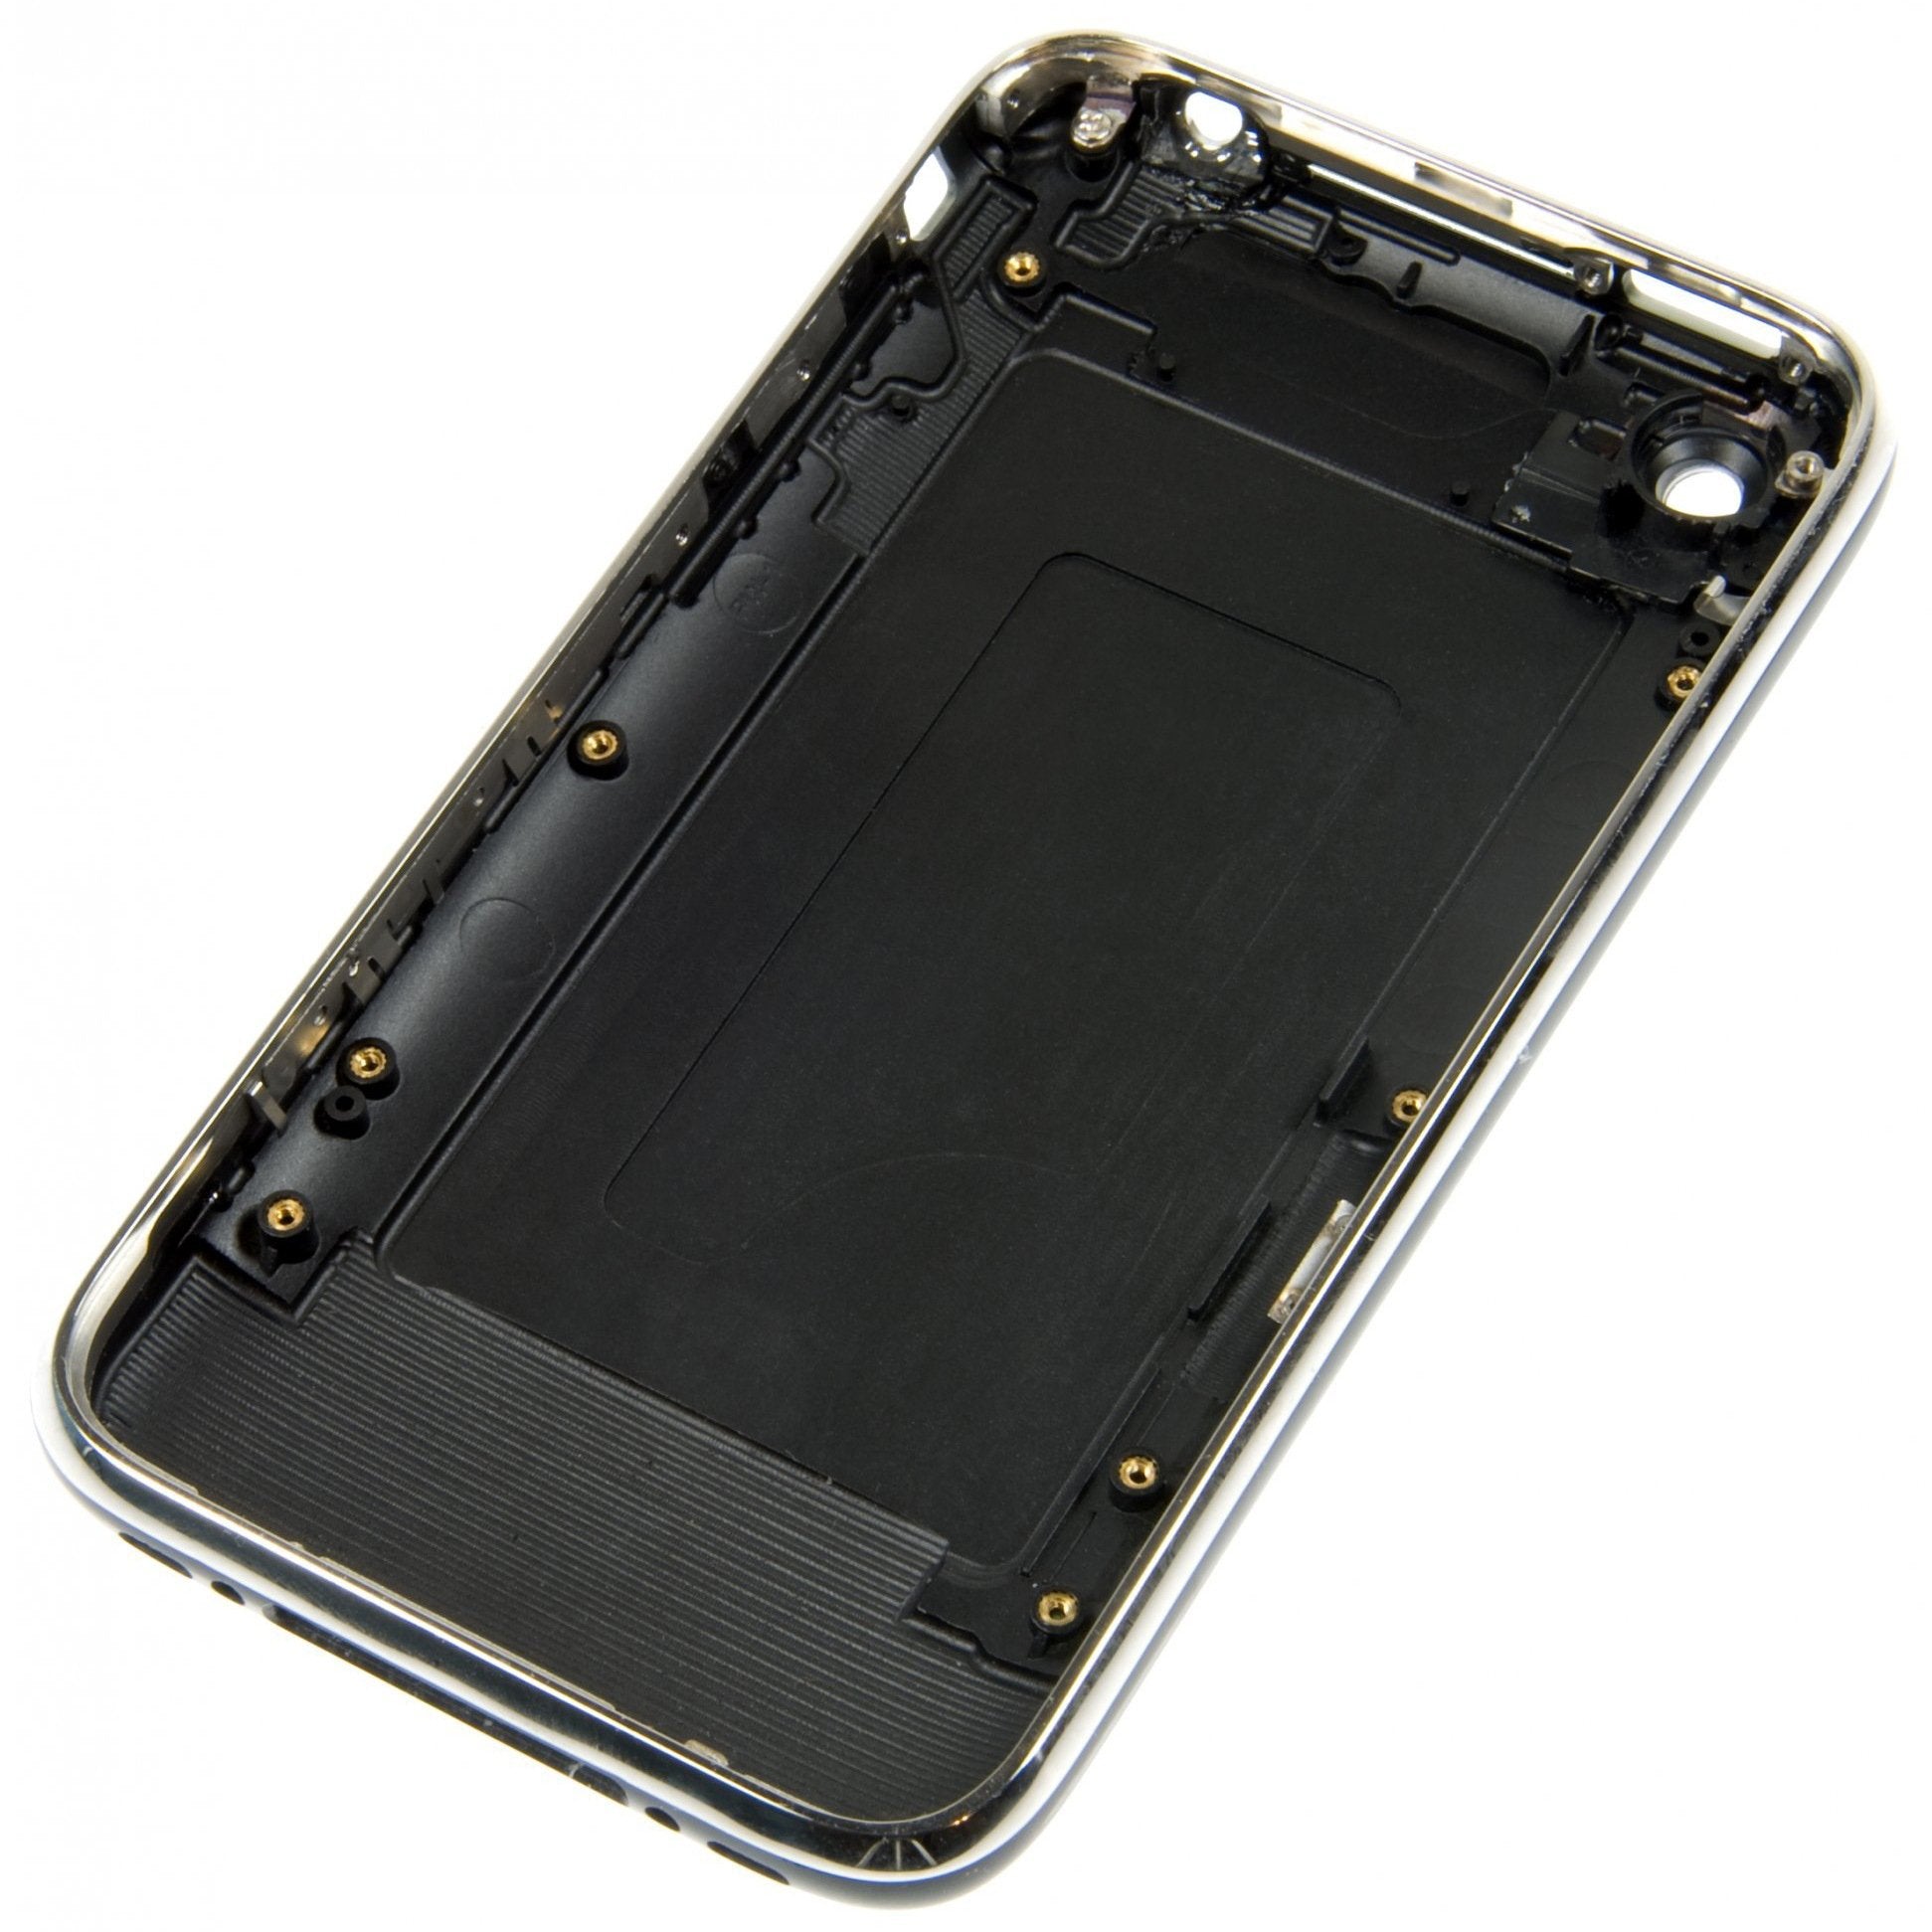 iPhone 3G Rear Case Black New 16GB Capacity Label